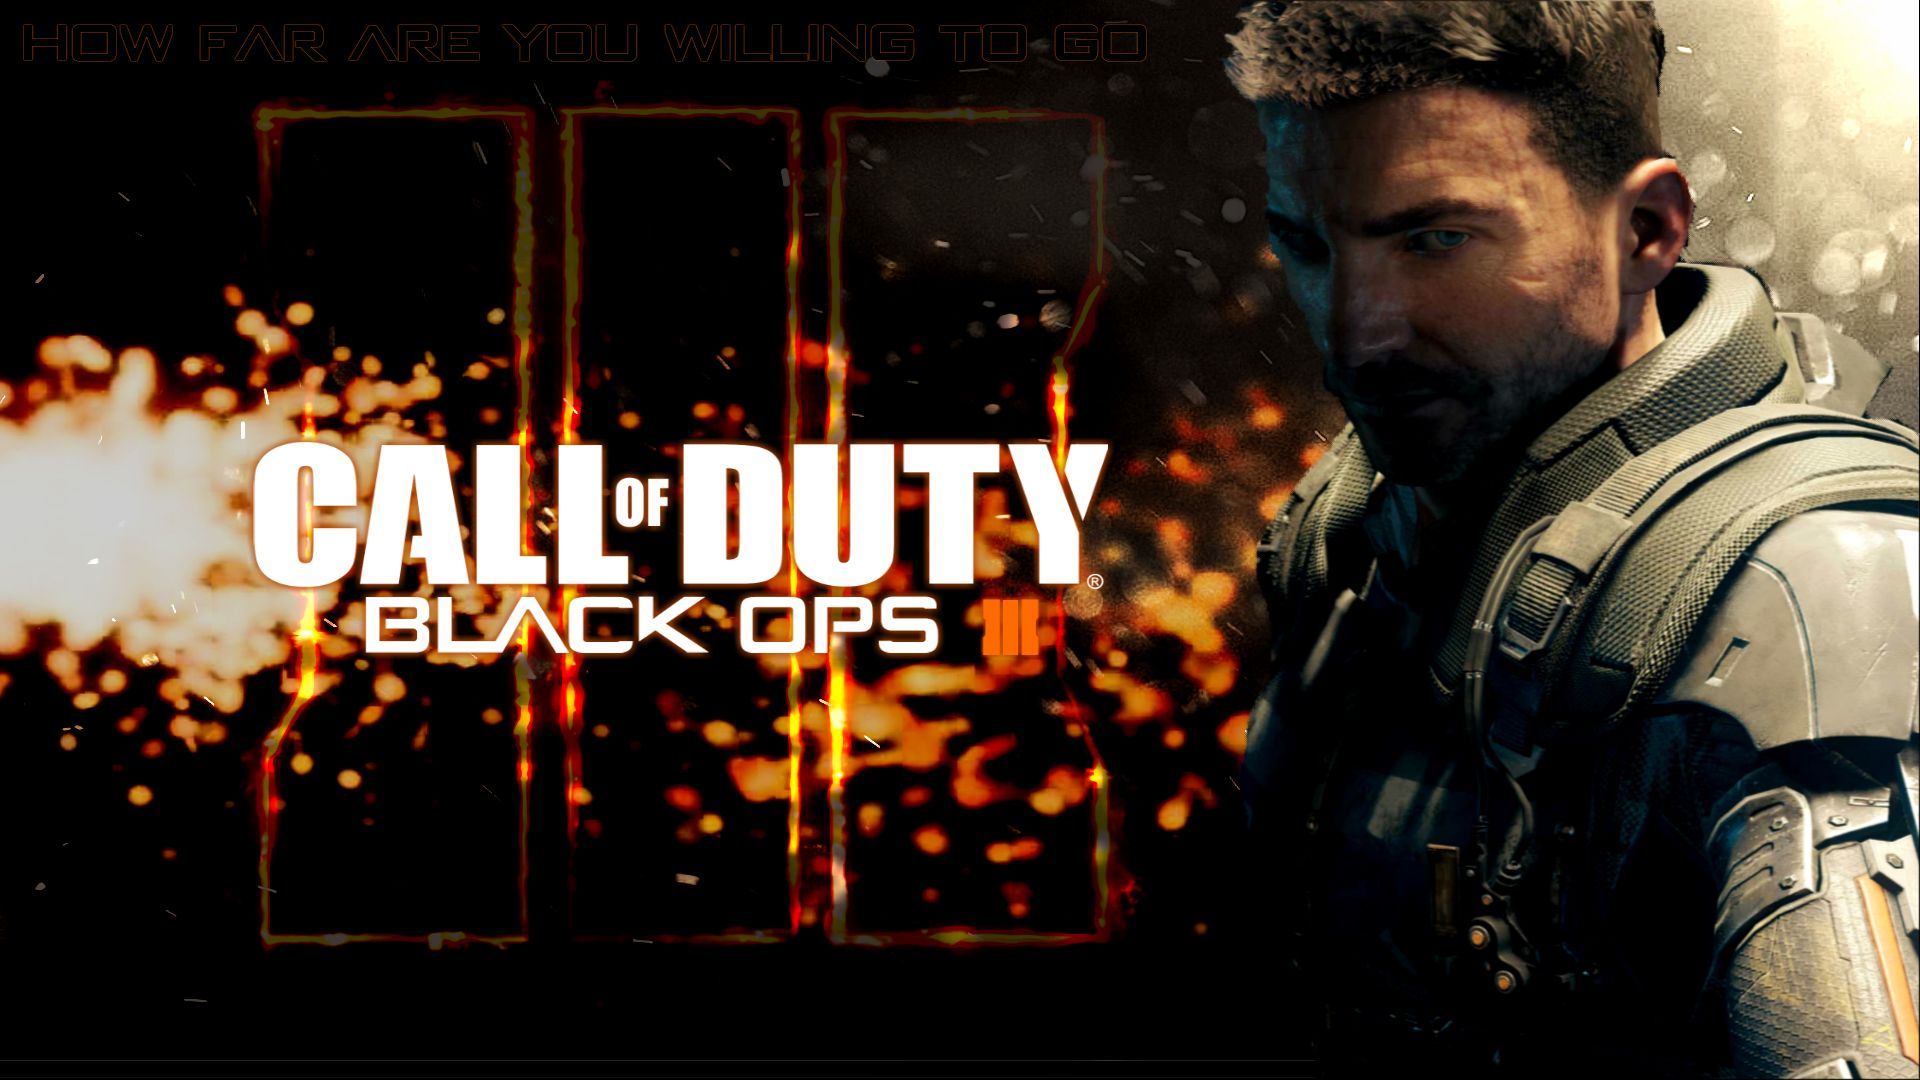 Call of Duty Black Ops III Backgrounds